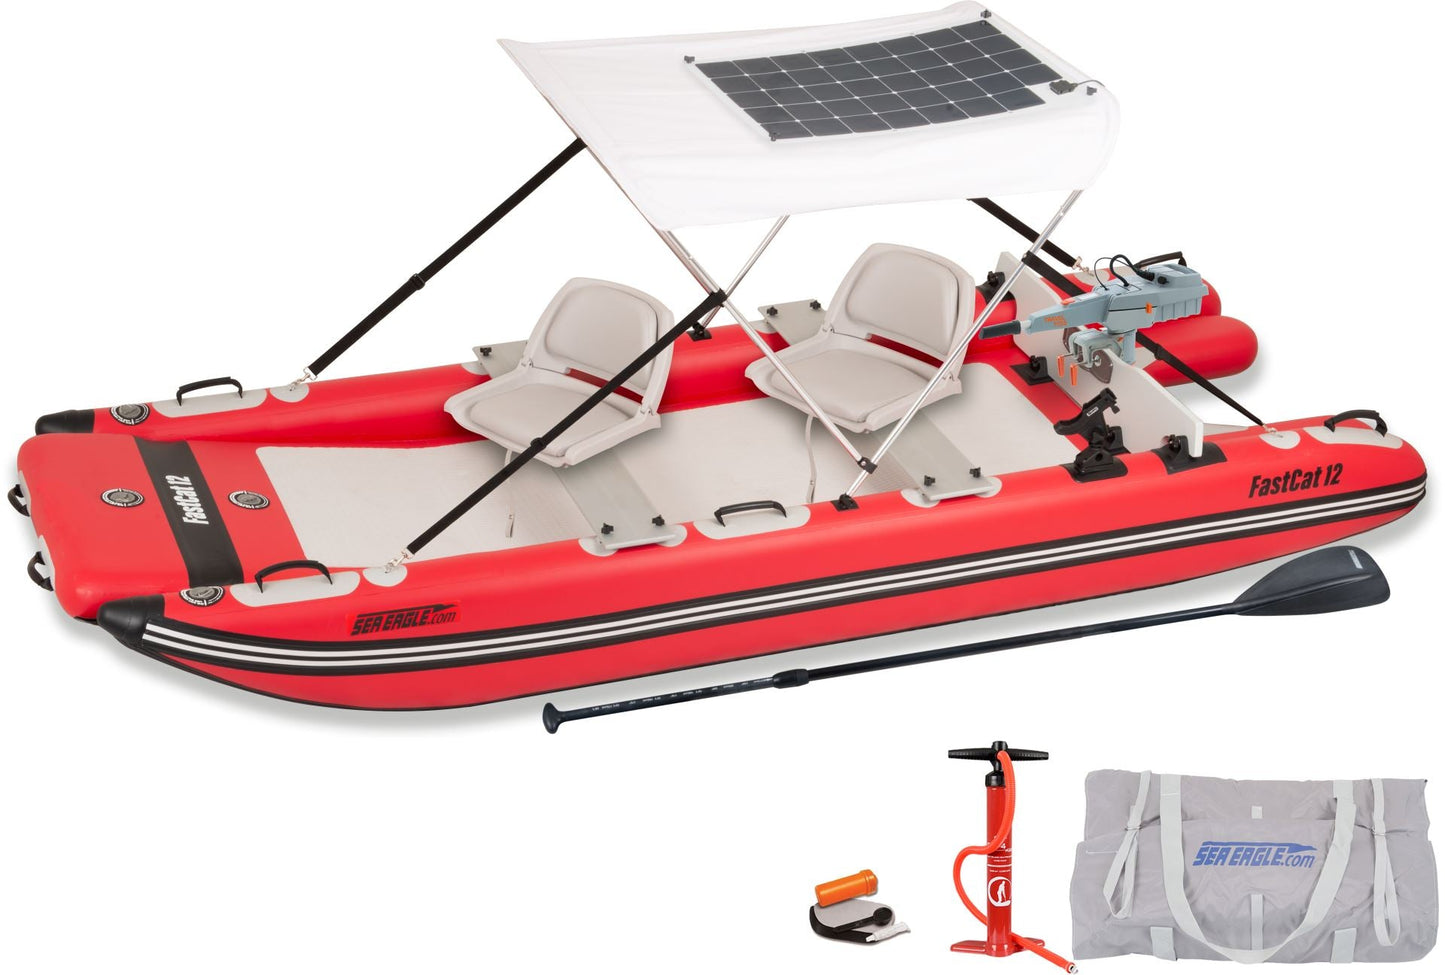 Sea Eagle FastCat12 Catamaran Inflatable Boat Torqeedo Solar Package